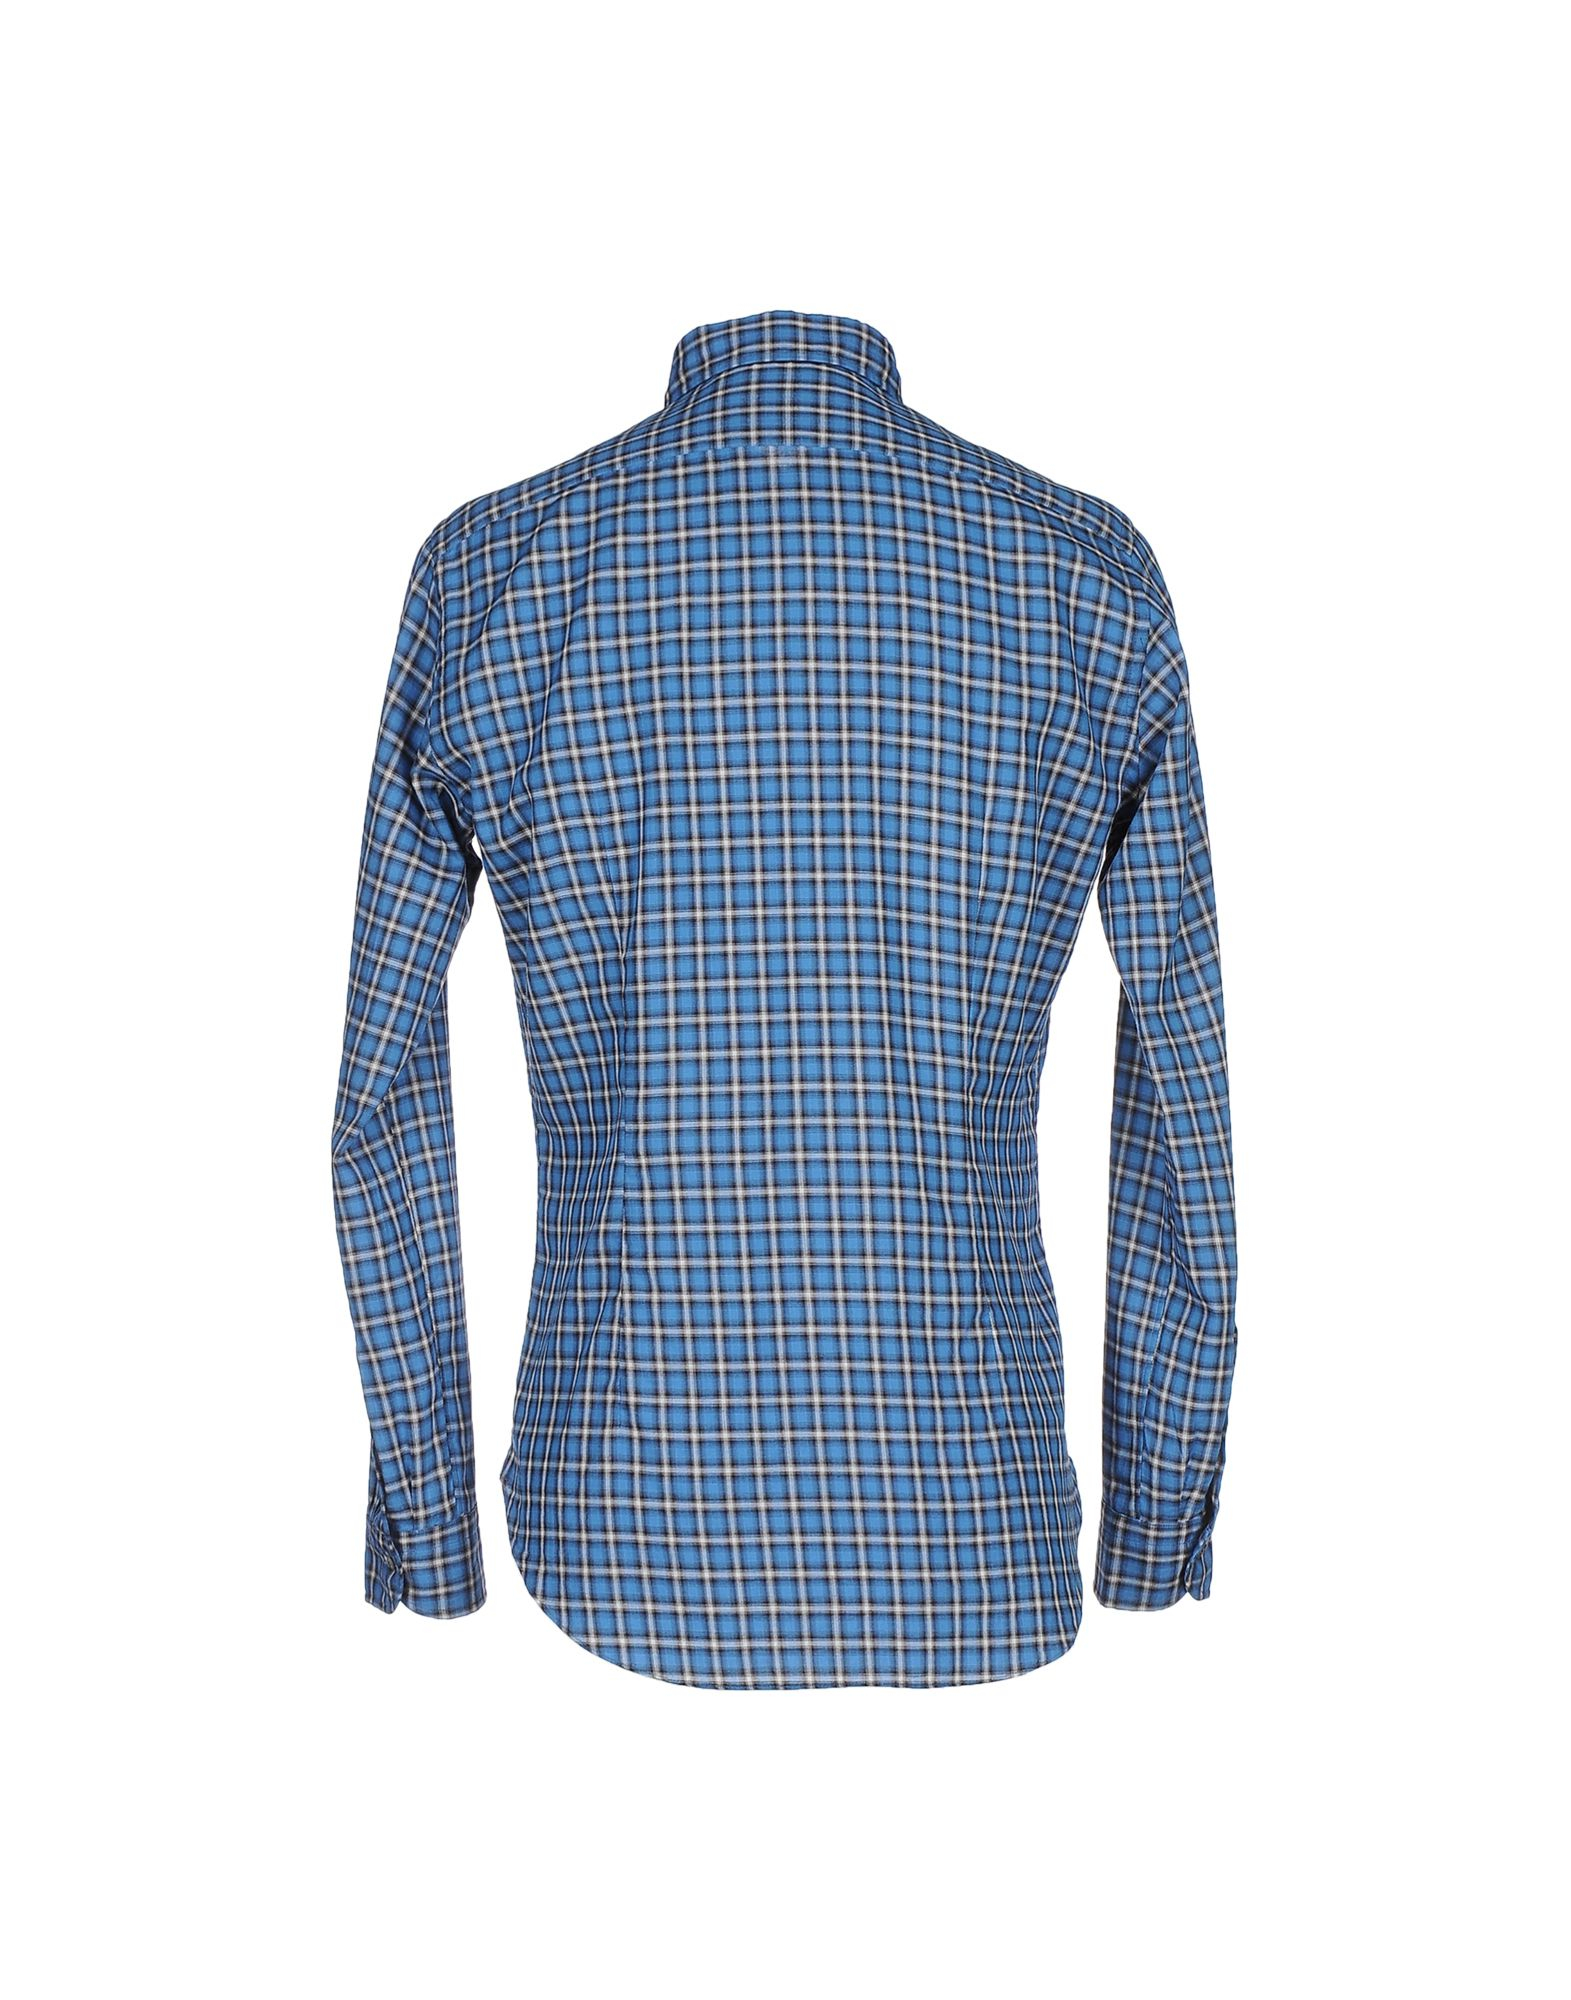 Lyst - Truzzi Shirt in Blue for Men